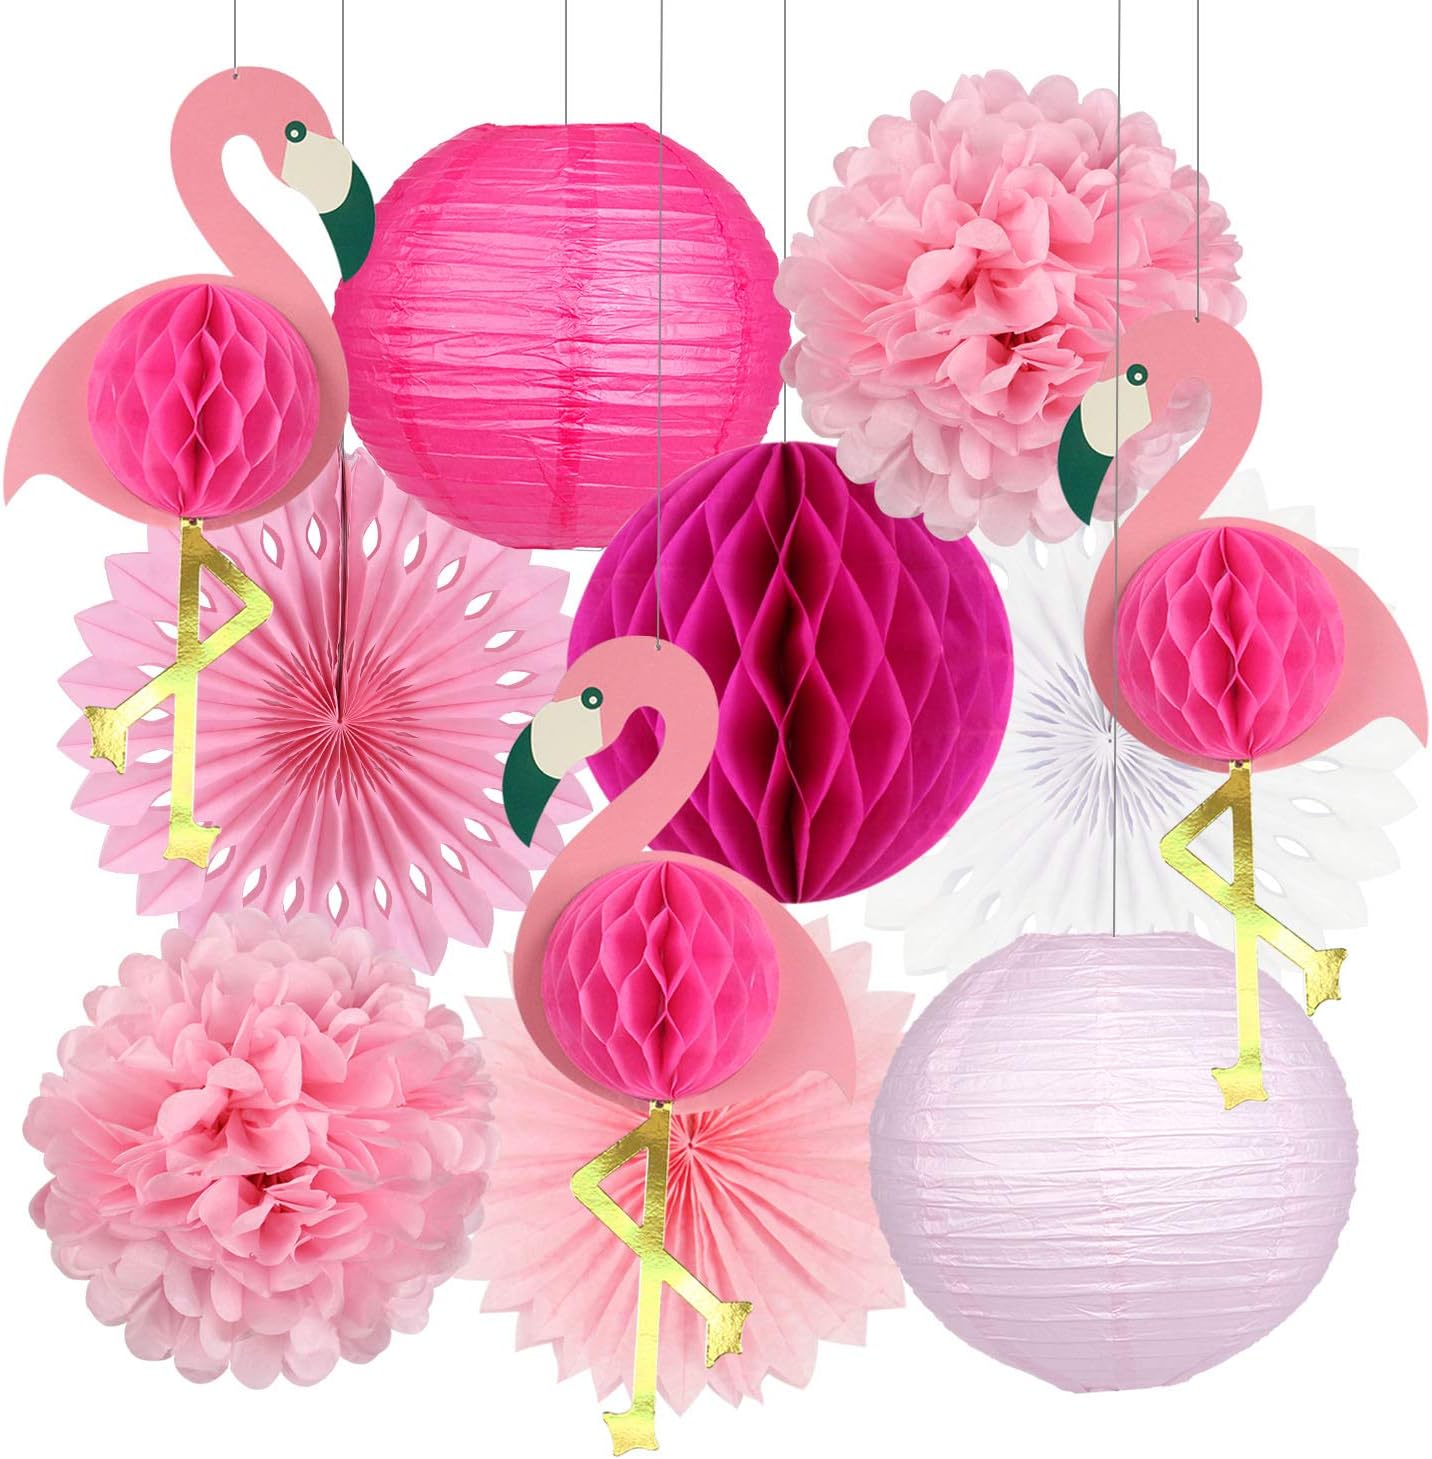 Bulk Hawaiian Luau Party Supplies Pink Flamingo Decor Pom Poms Flowers Fans Lanterns Wholesale